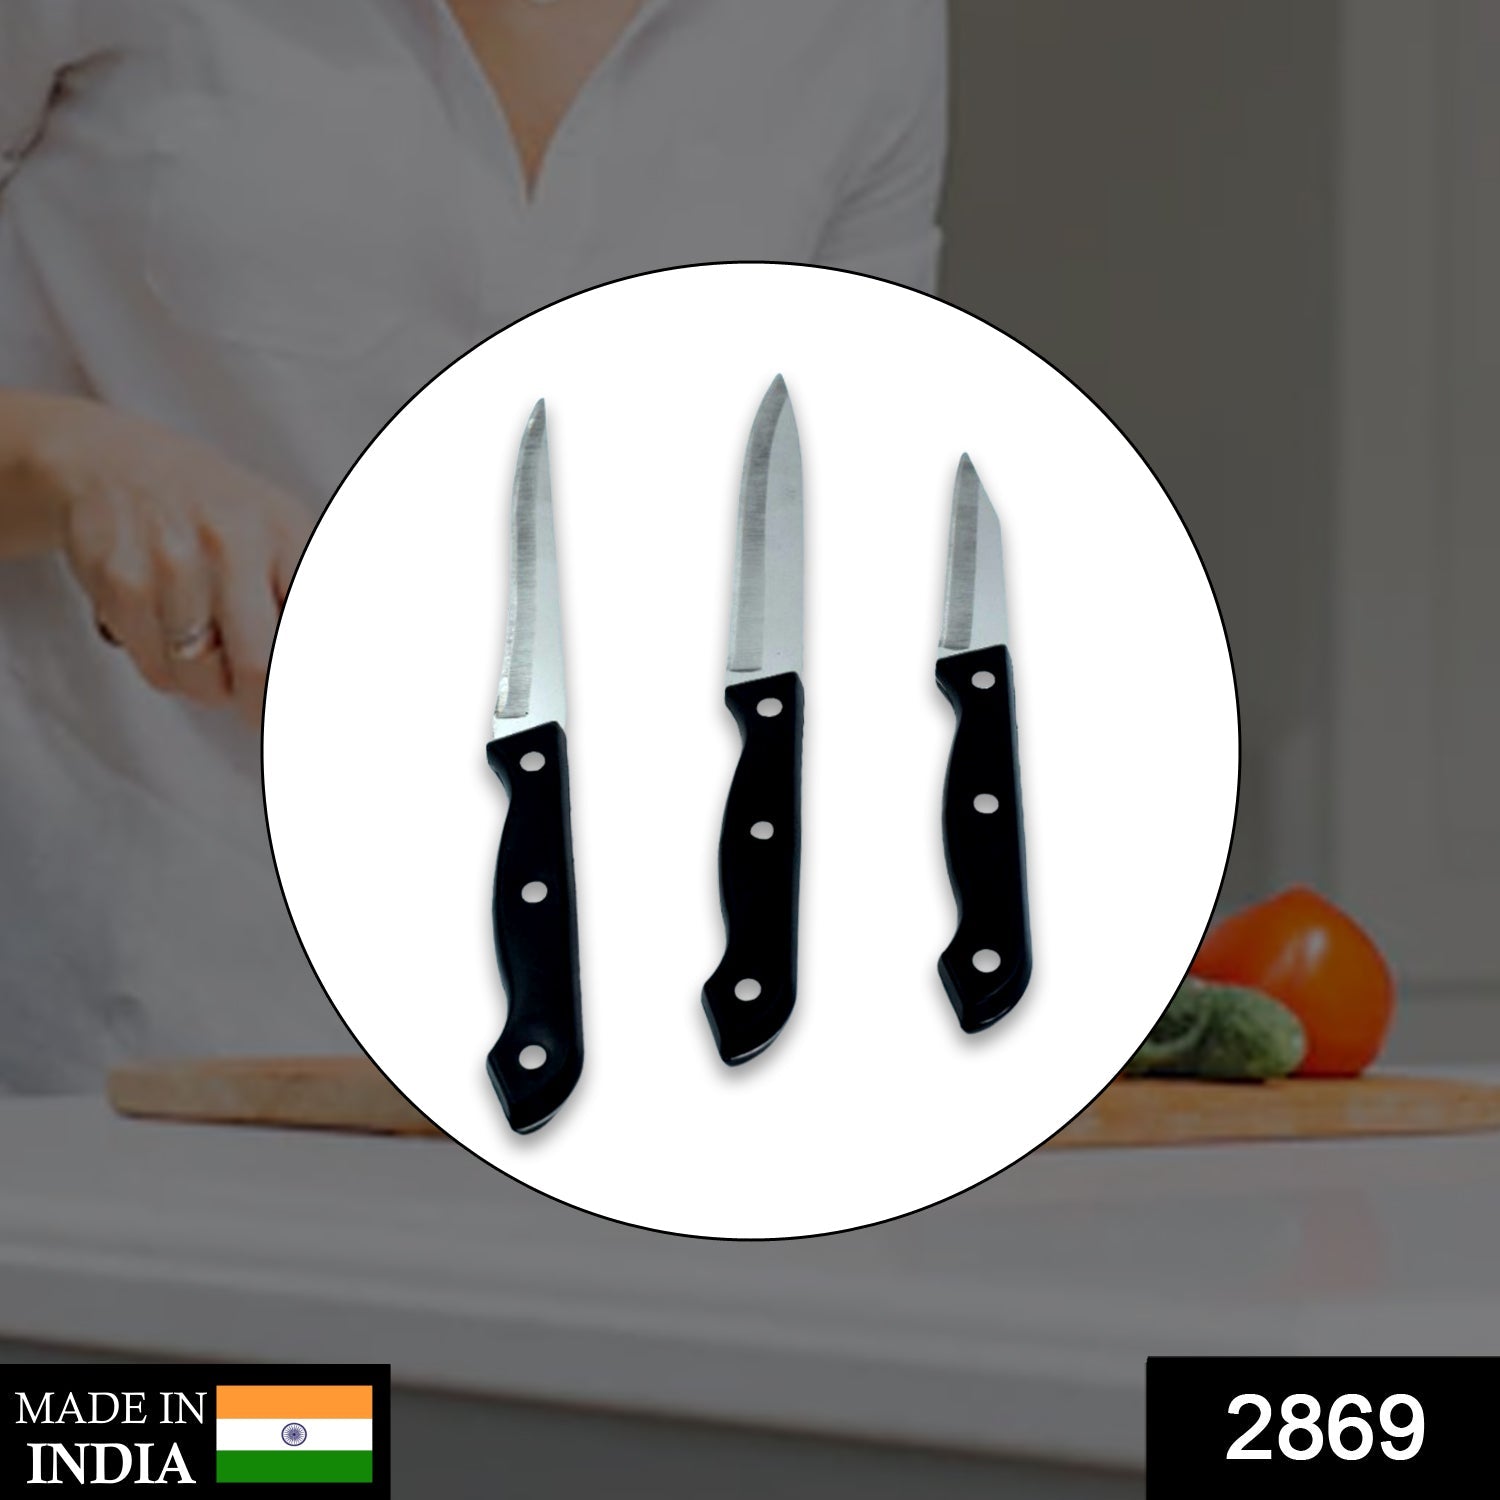 2869 Stainless Steel Kitchen Floret|Glare kitchen compact knife set DeoDap